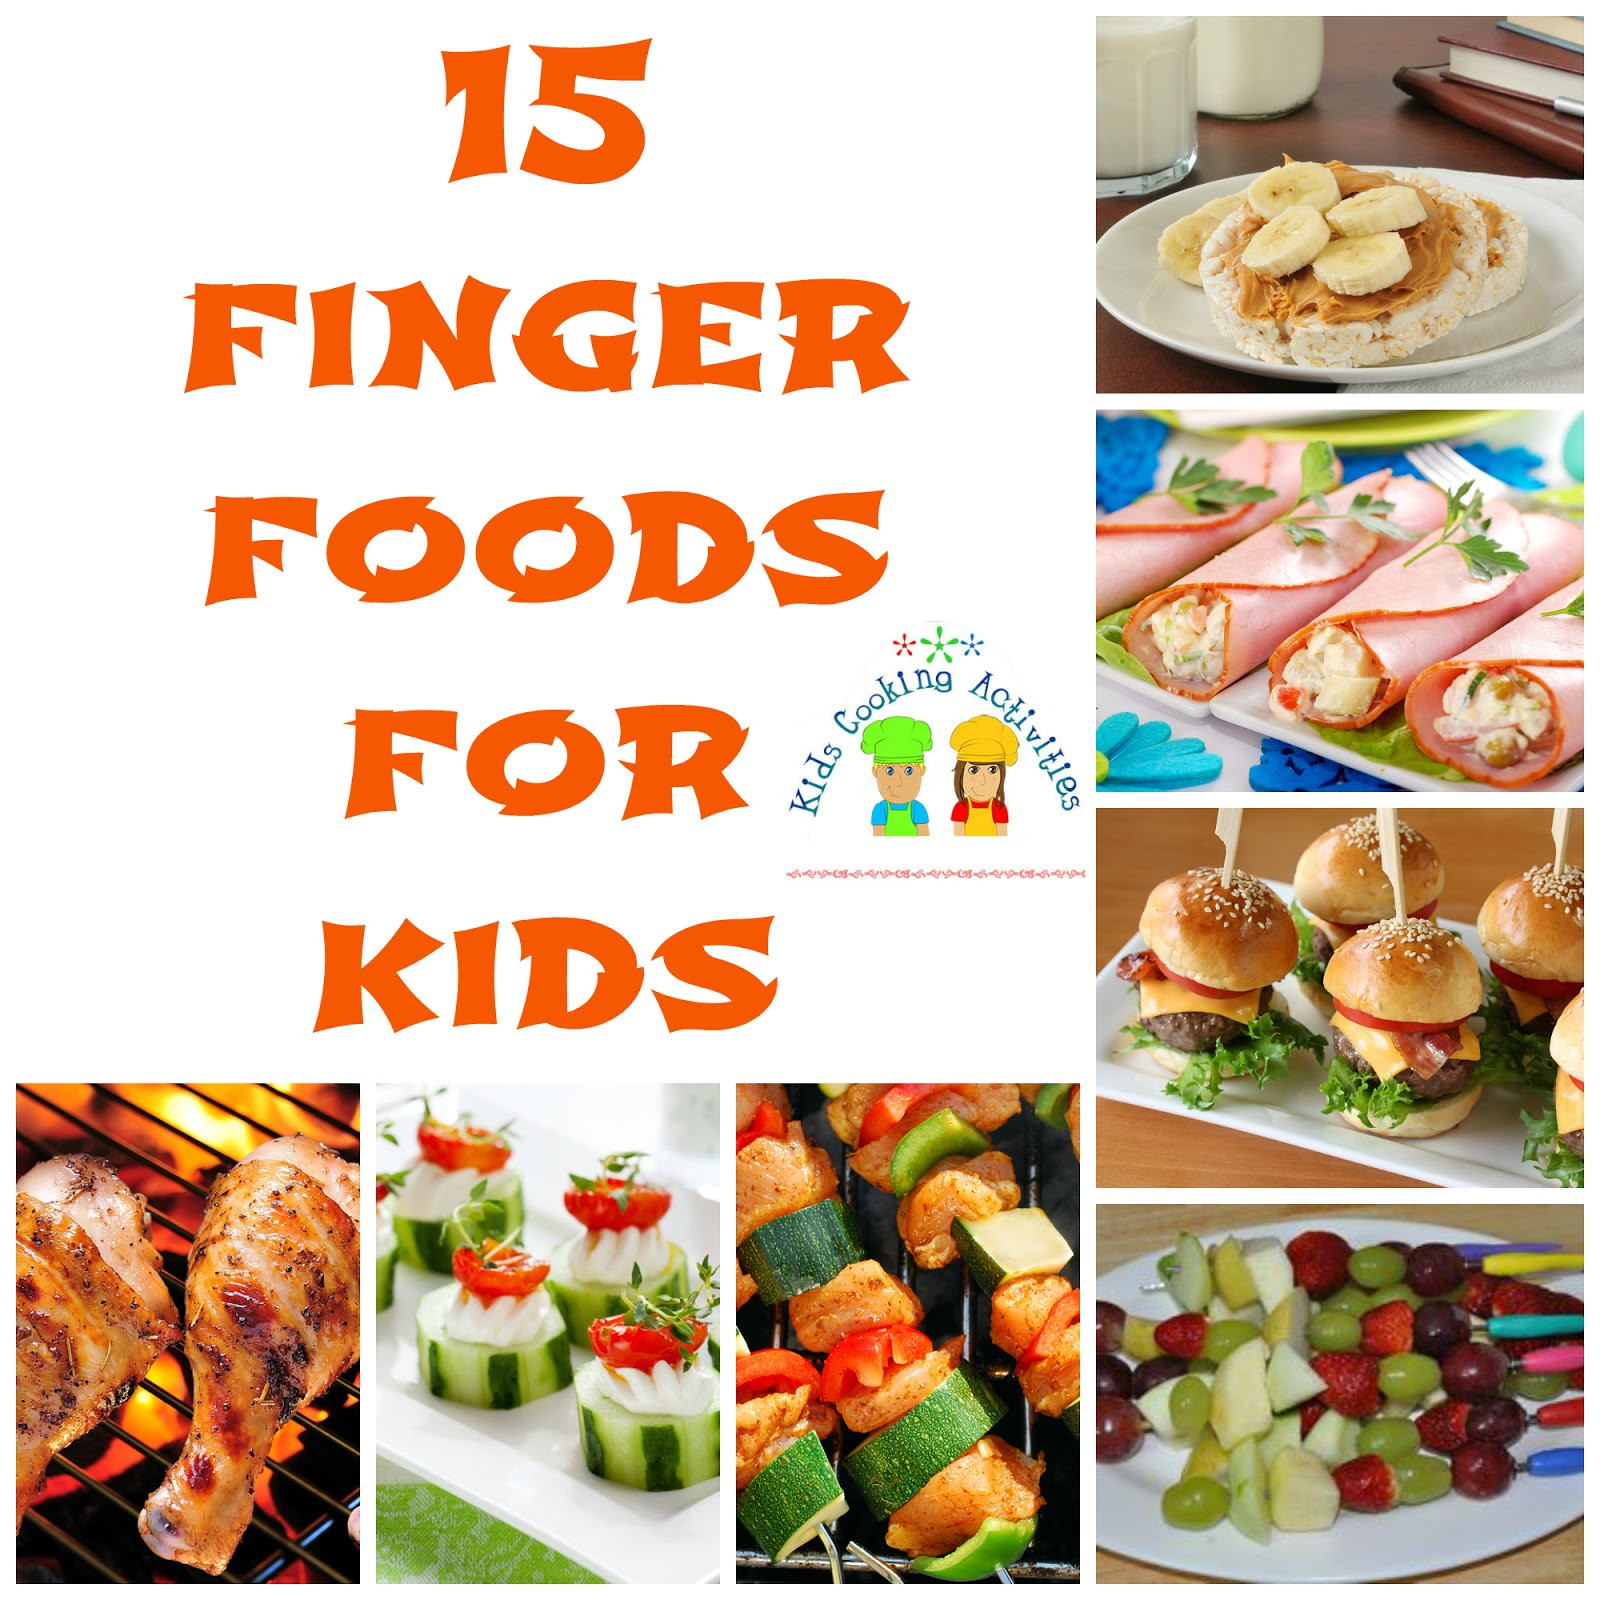 Easy Finger Foods For Kids Party
 15 Finger Foods for Kids